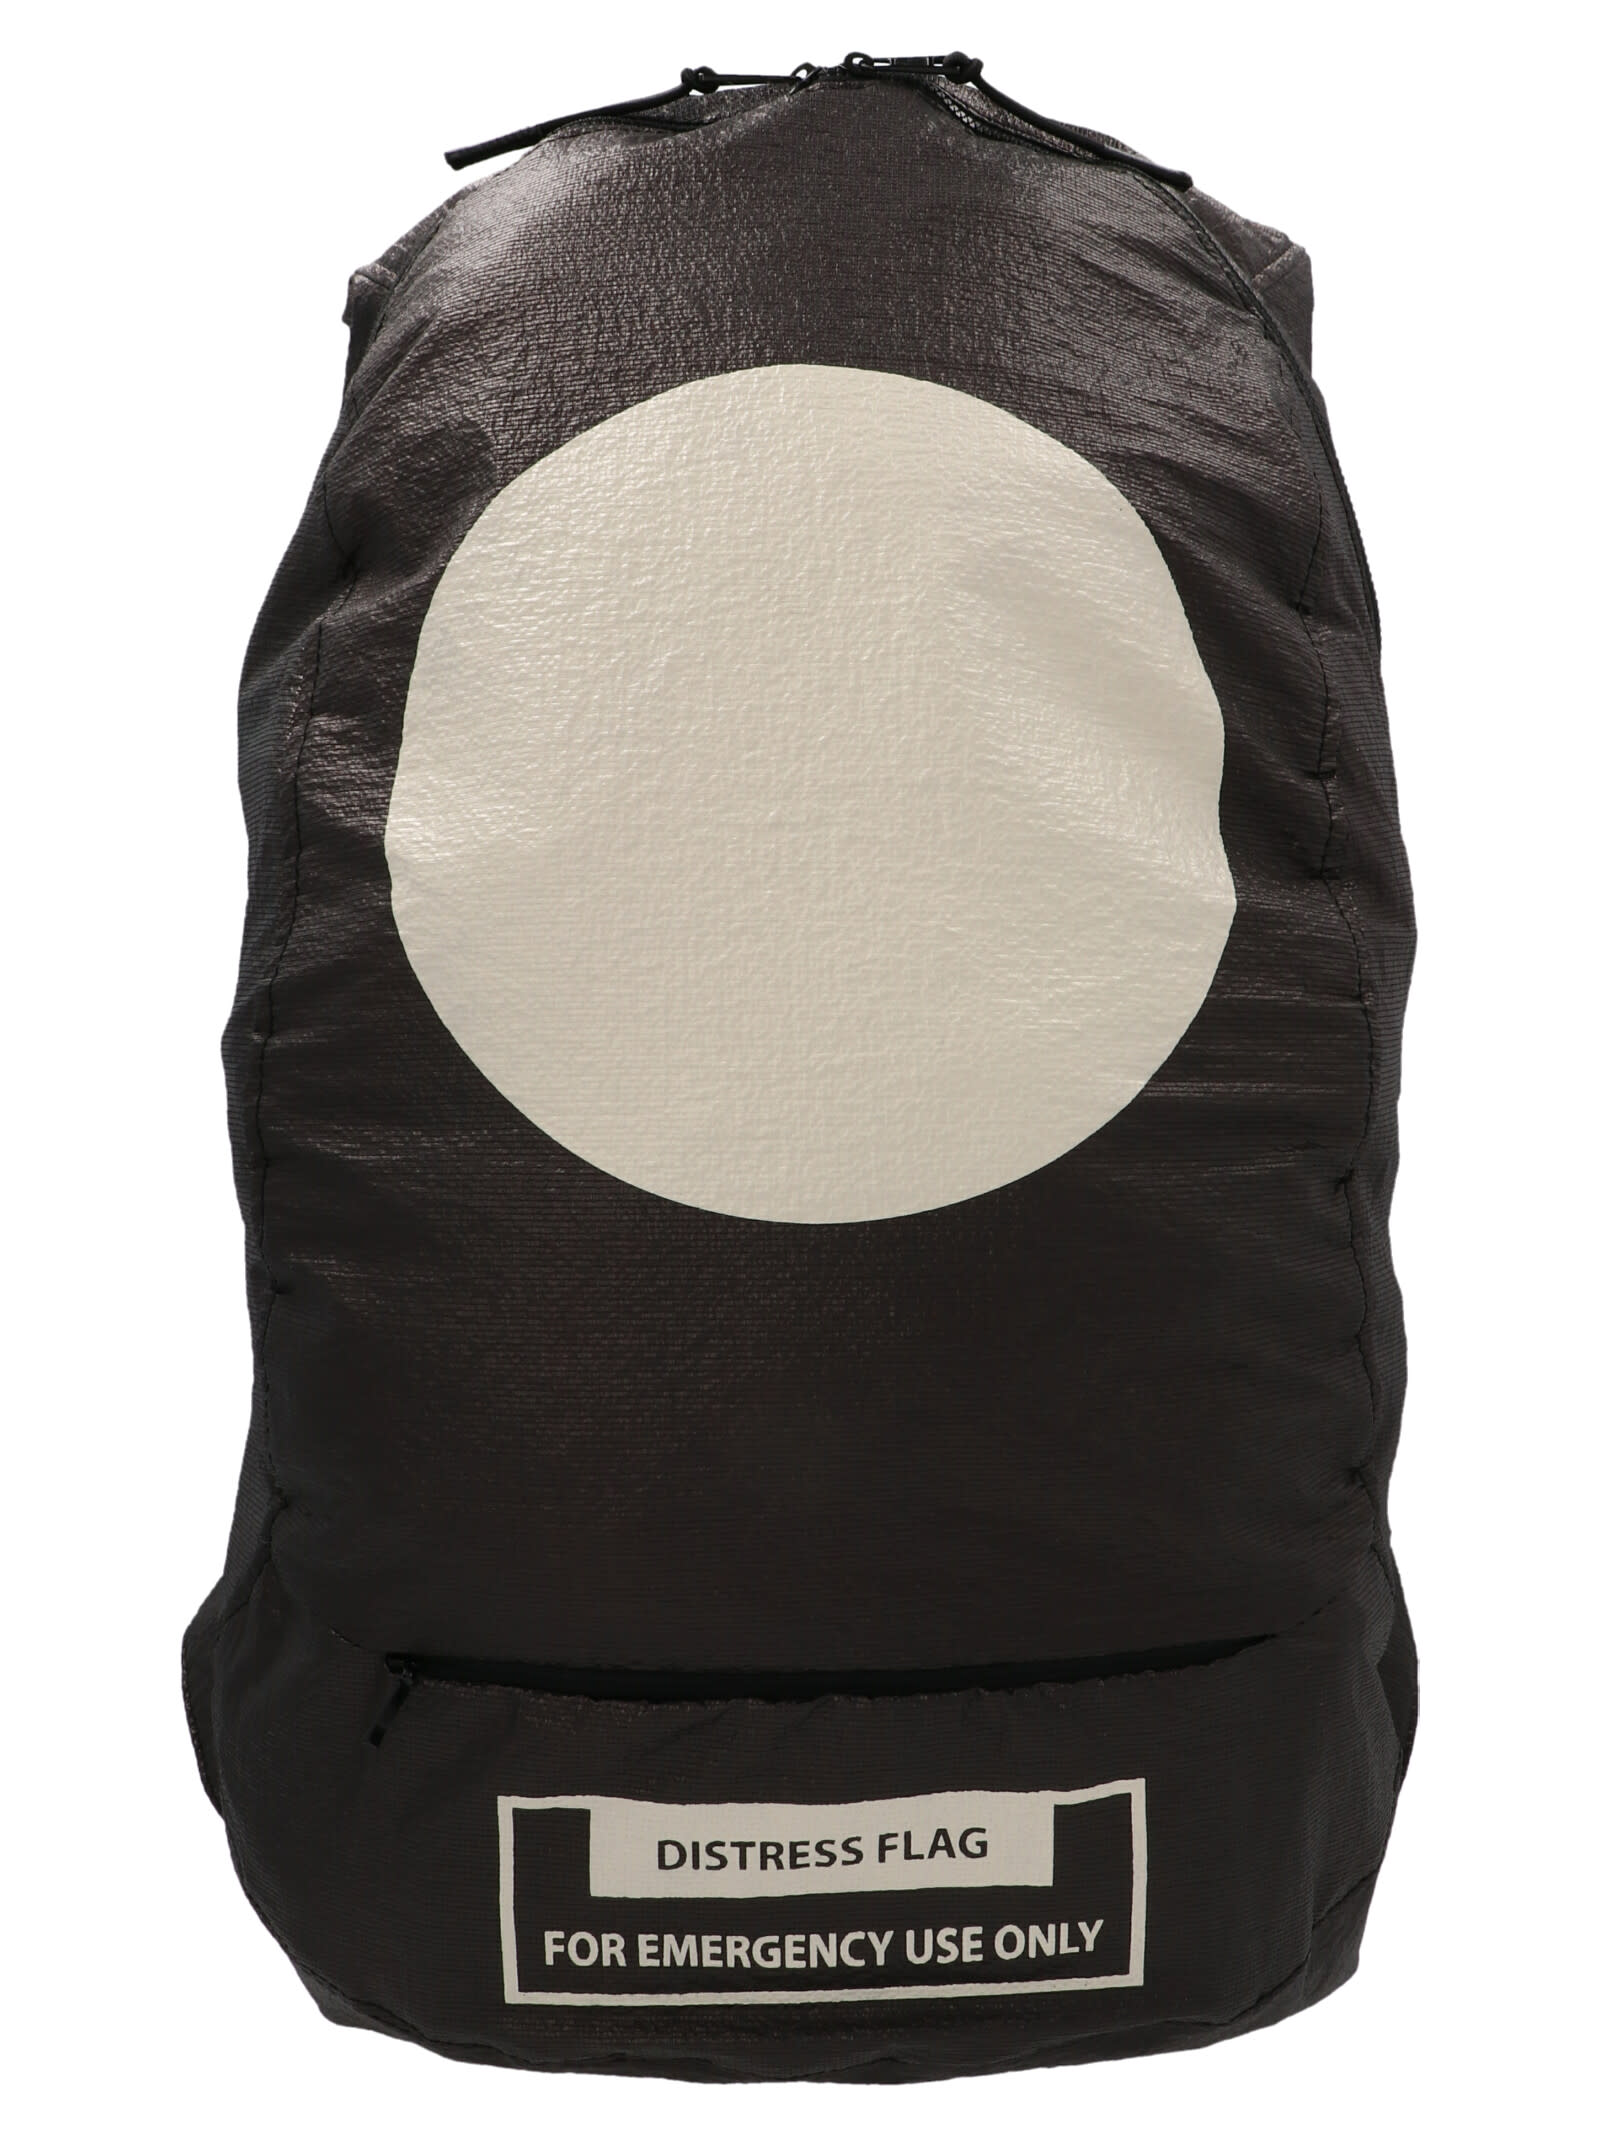 Moncler Genius X Craig Green cg Backpack Backpack